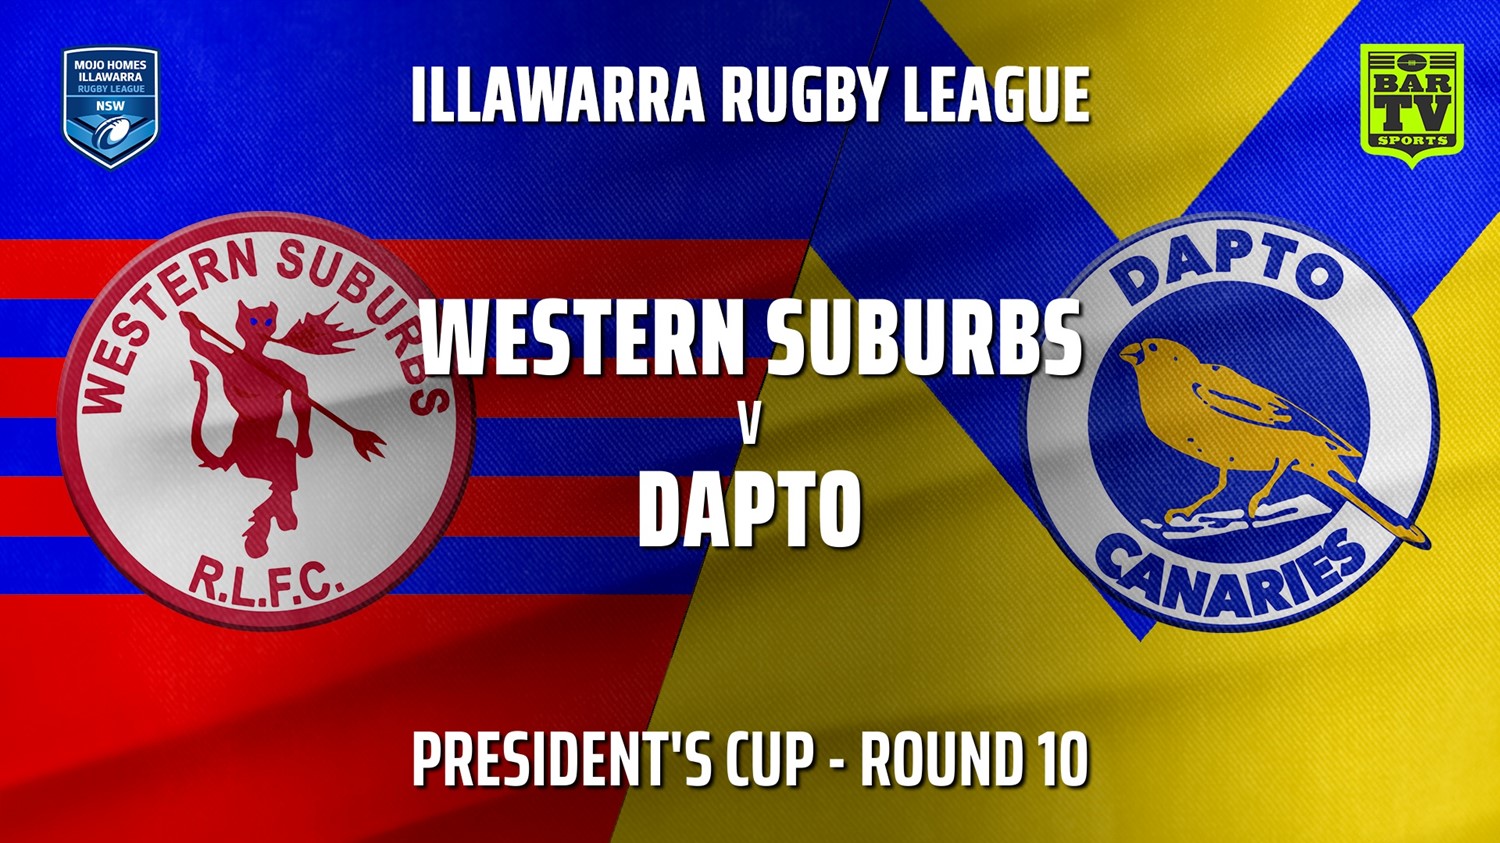 210626-Illawarra Round 10 - President's Cup - Western Suburbs Devils v Dapto Canaries Slate Image